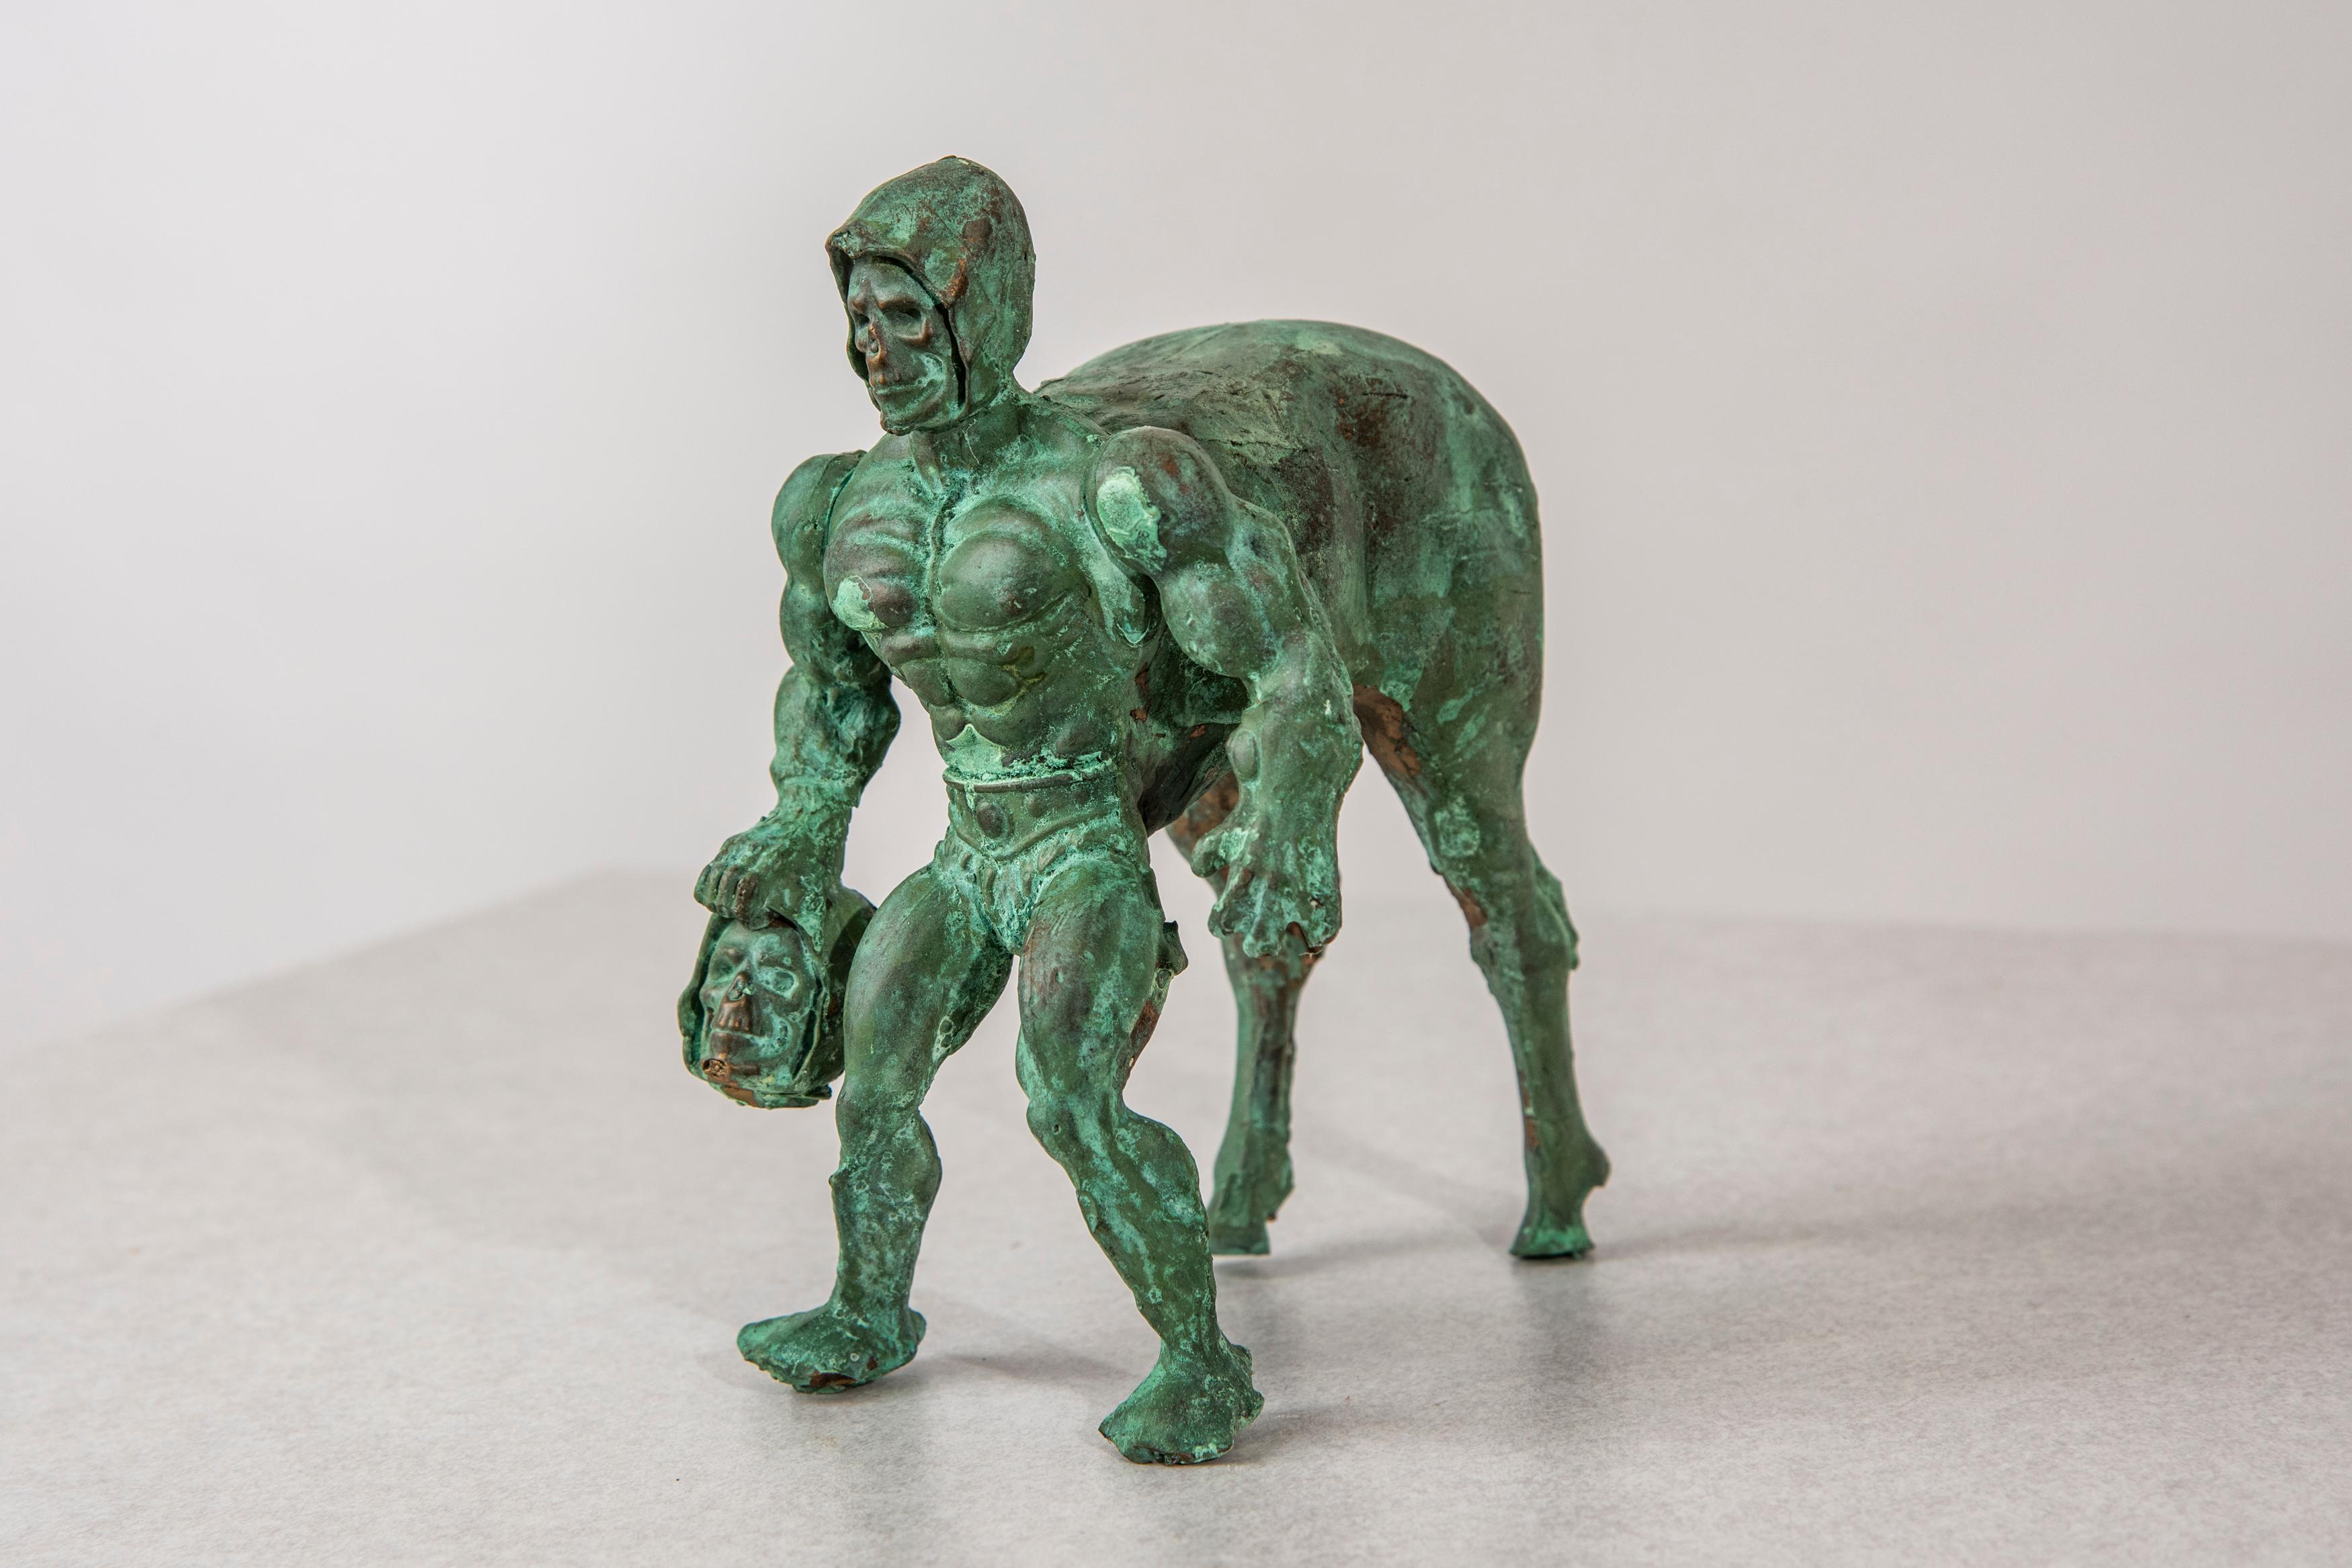 Figurative Sculpture Joshua Goode - Sculpture figurative en bronze : Skeletaur